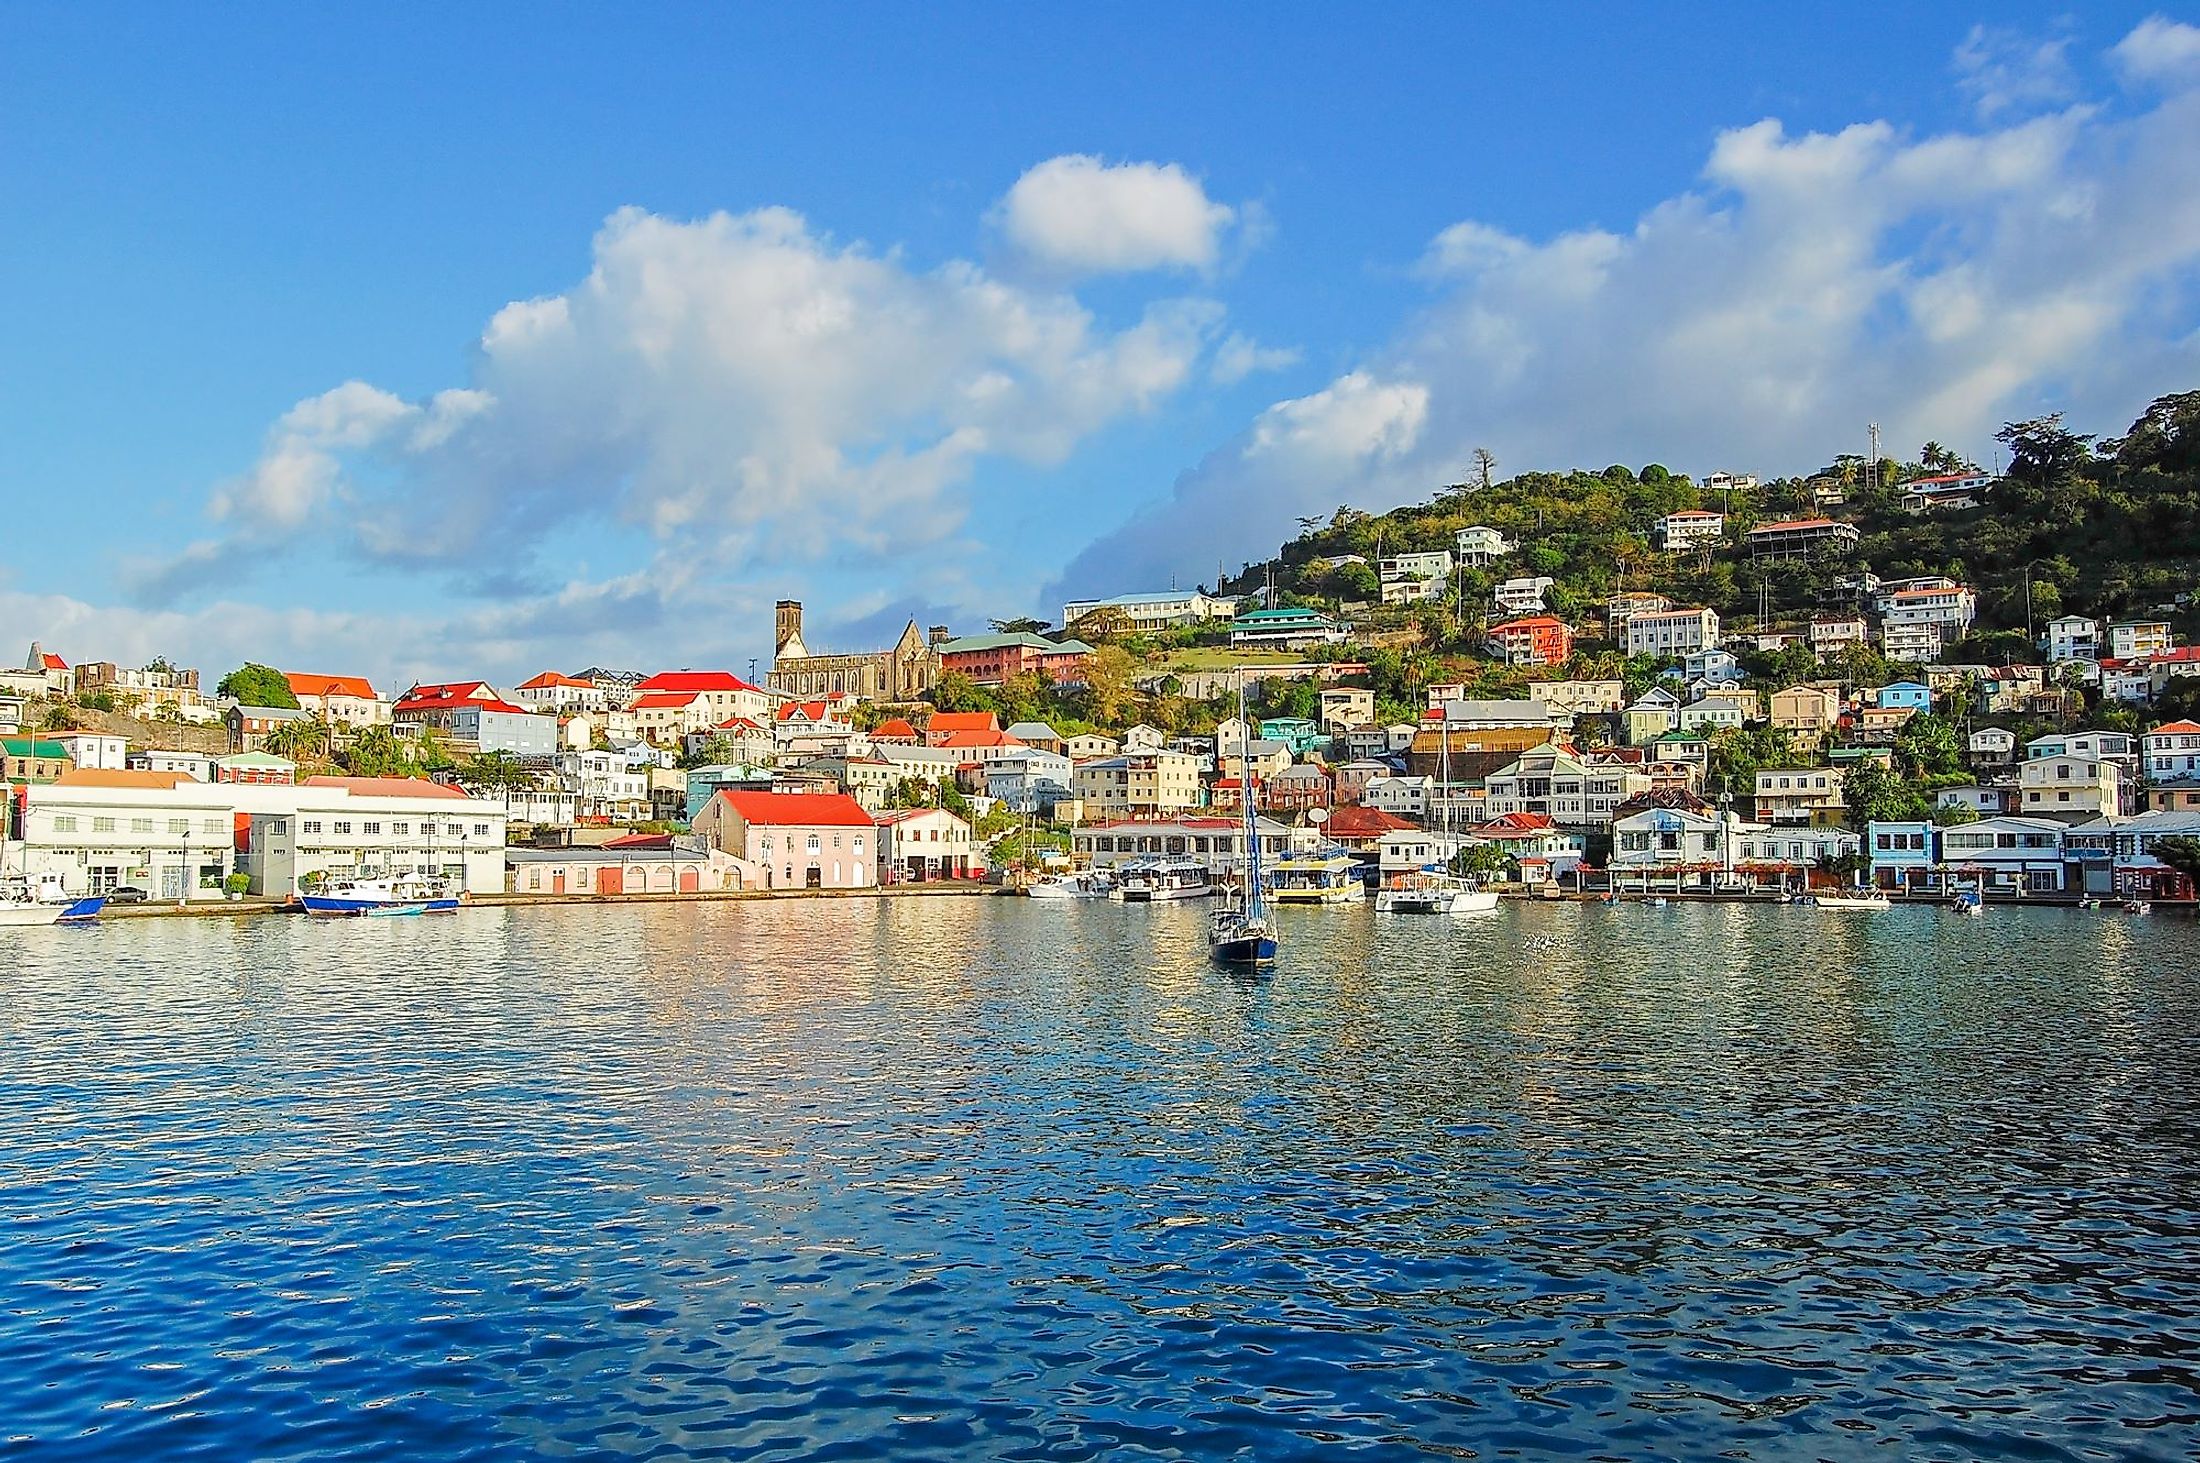 View of Saint George's Harbor in Grenada